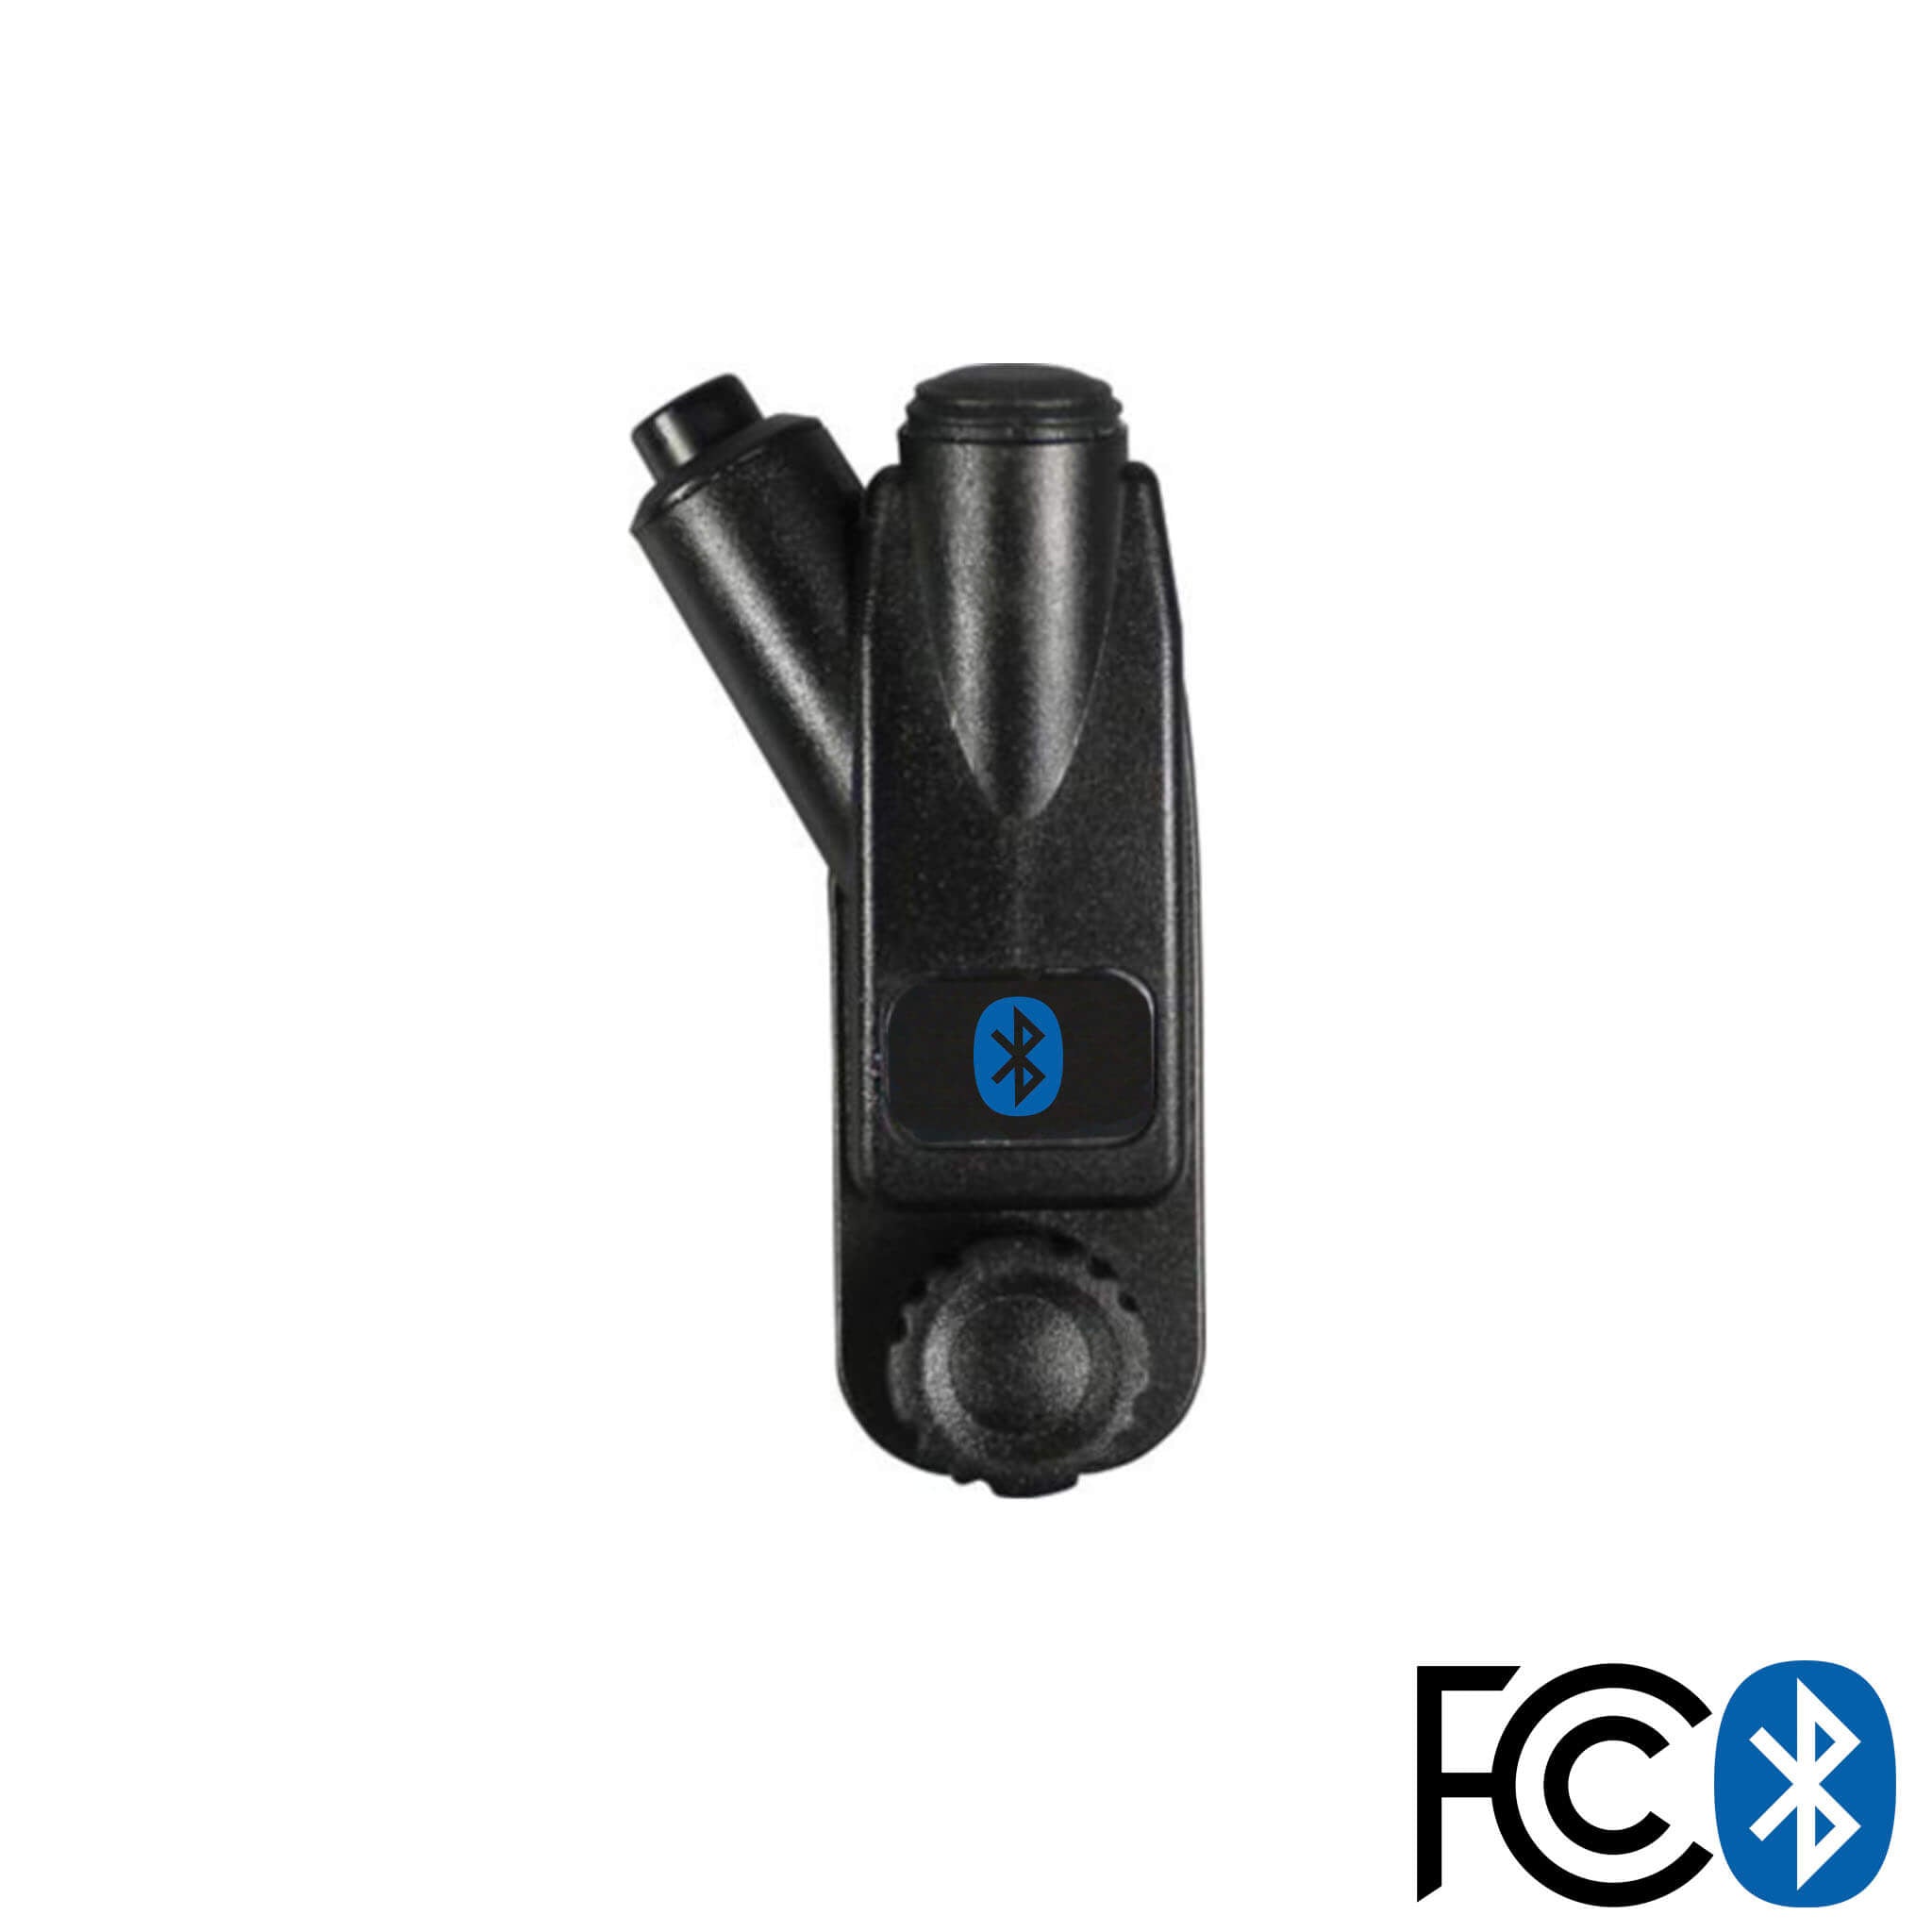 Bluetooth Radio Adapter For Mic/Earpiece: Motorola APX (Apex